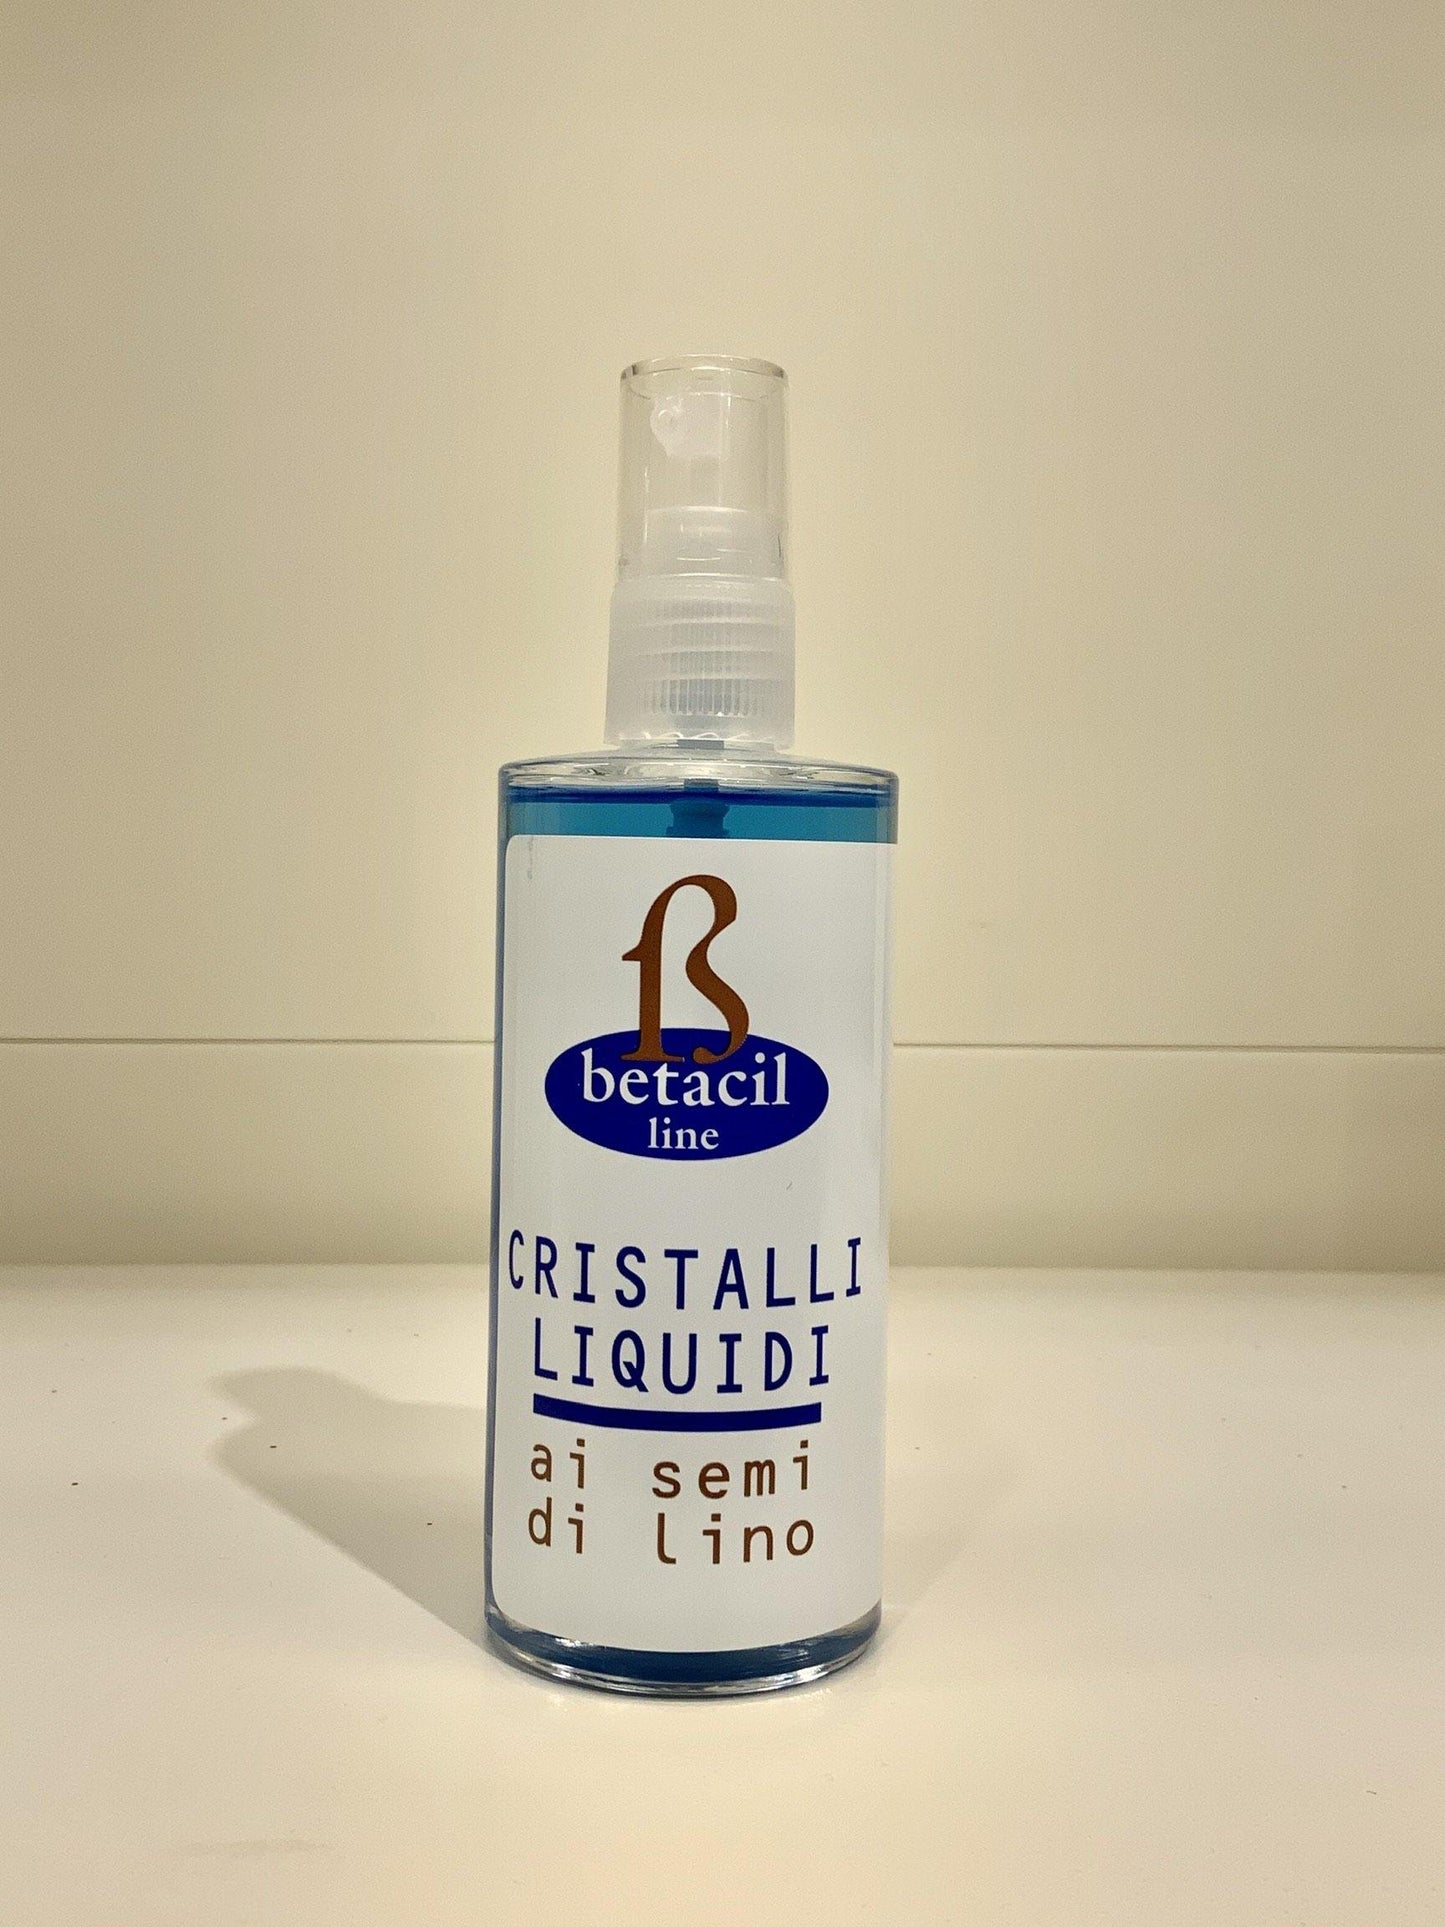 Cristalli liquidi Betacil line - Jolly65